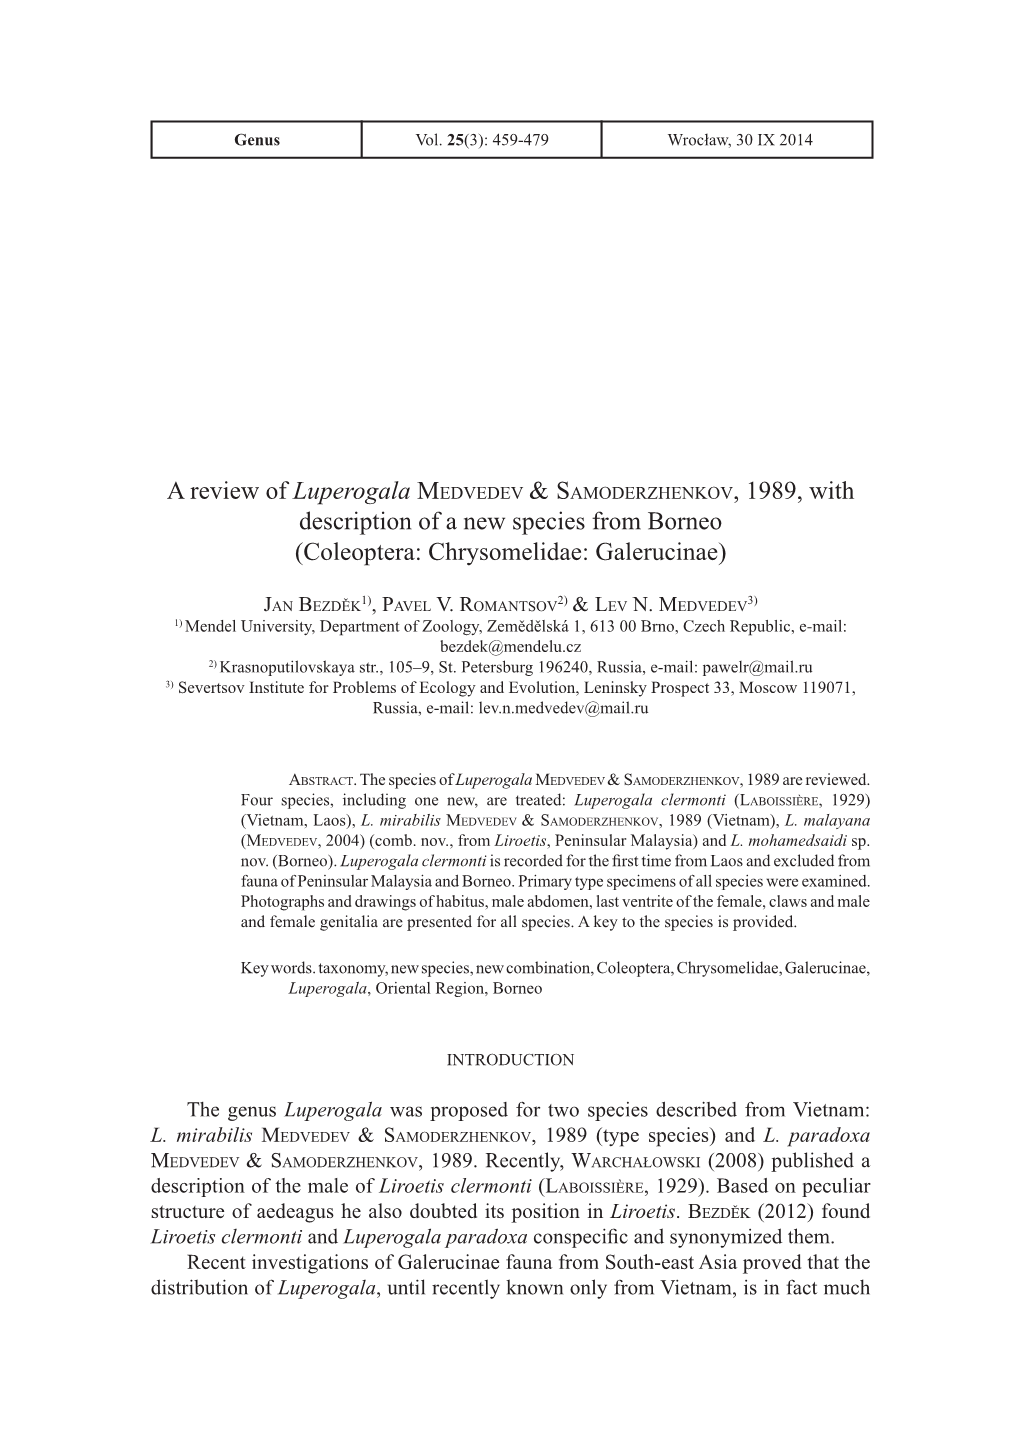 A Review of Luperogala MEDVEDEV & SAMODERZHENKOV, 1989, With